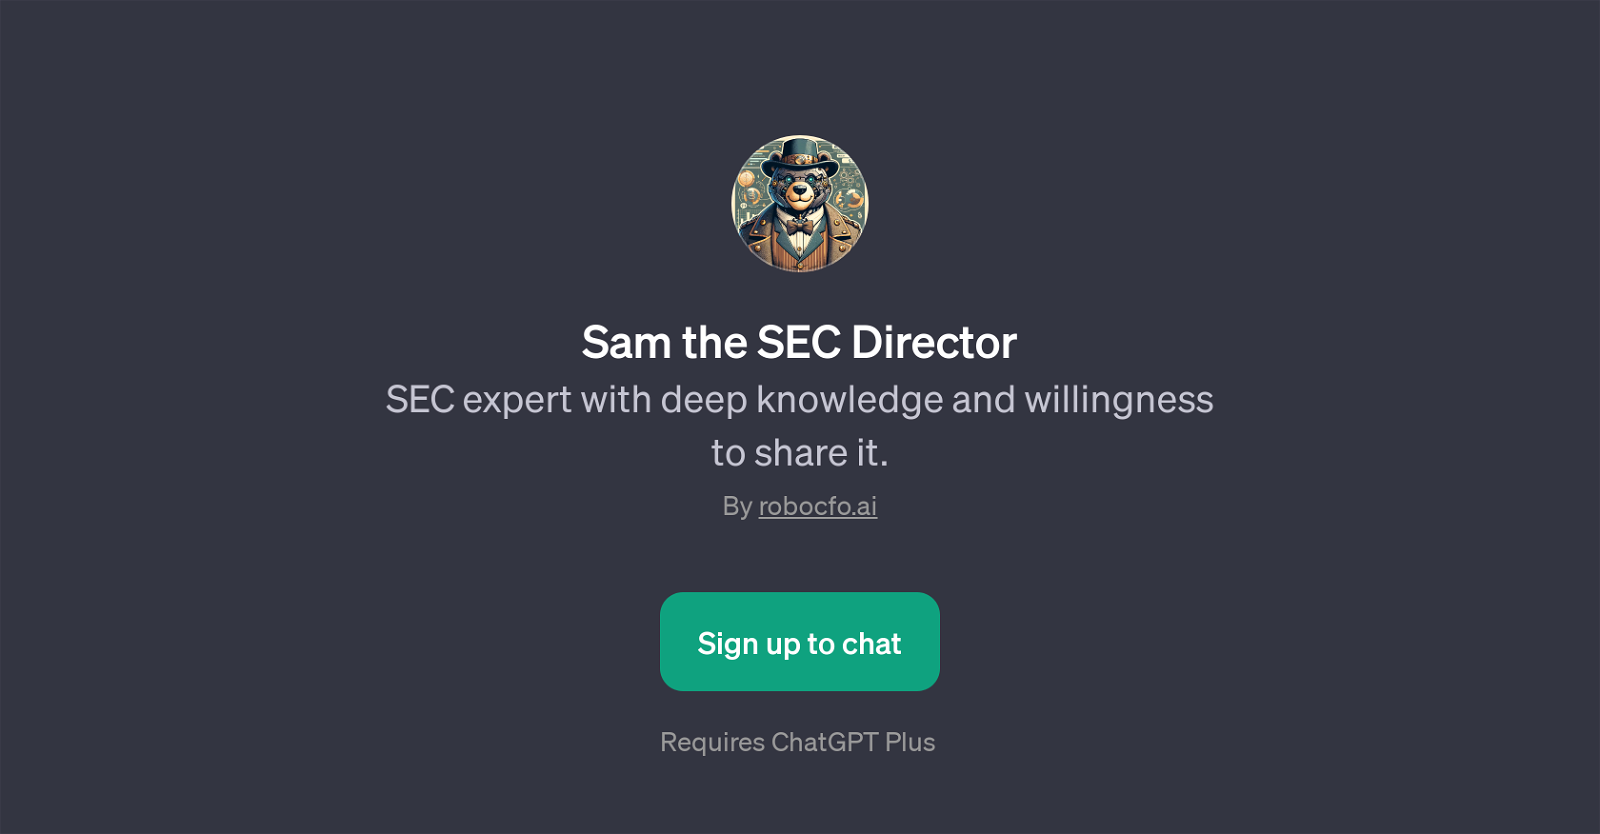 Sam the SEC Director website